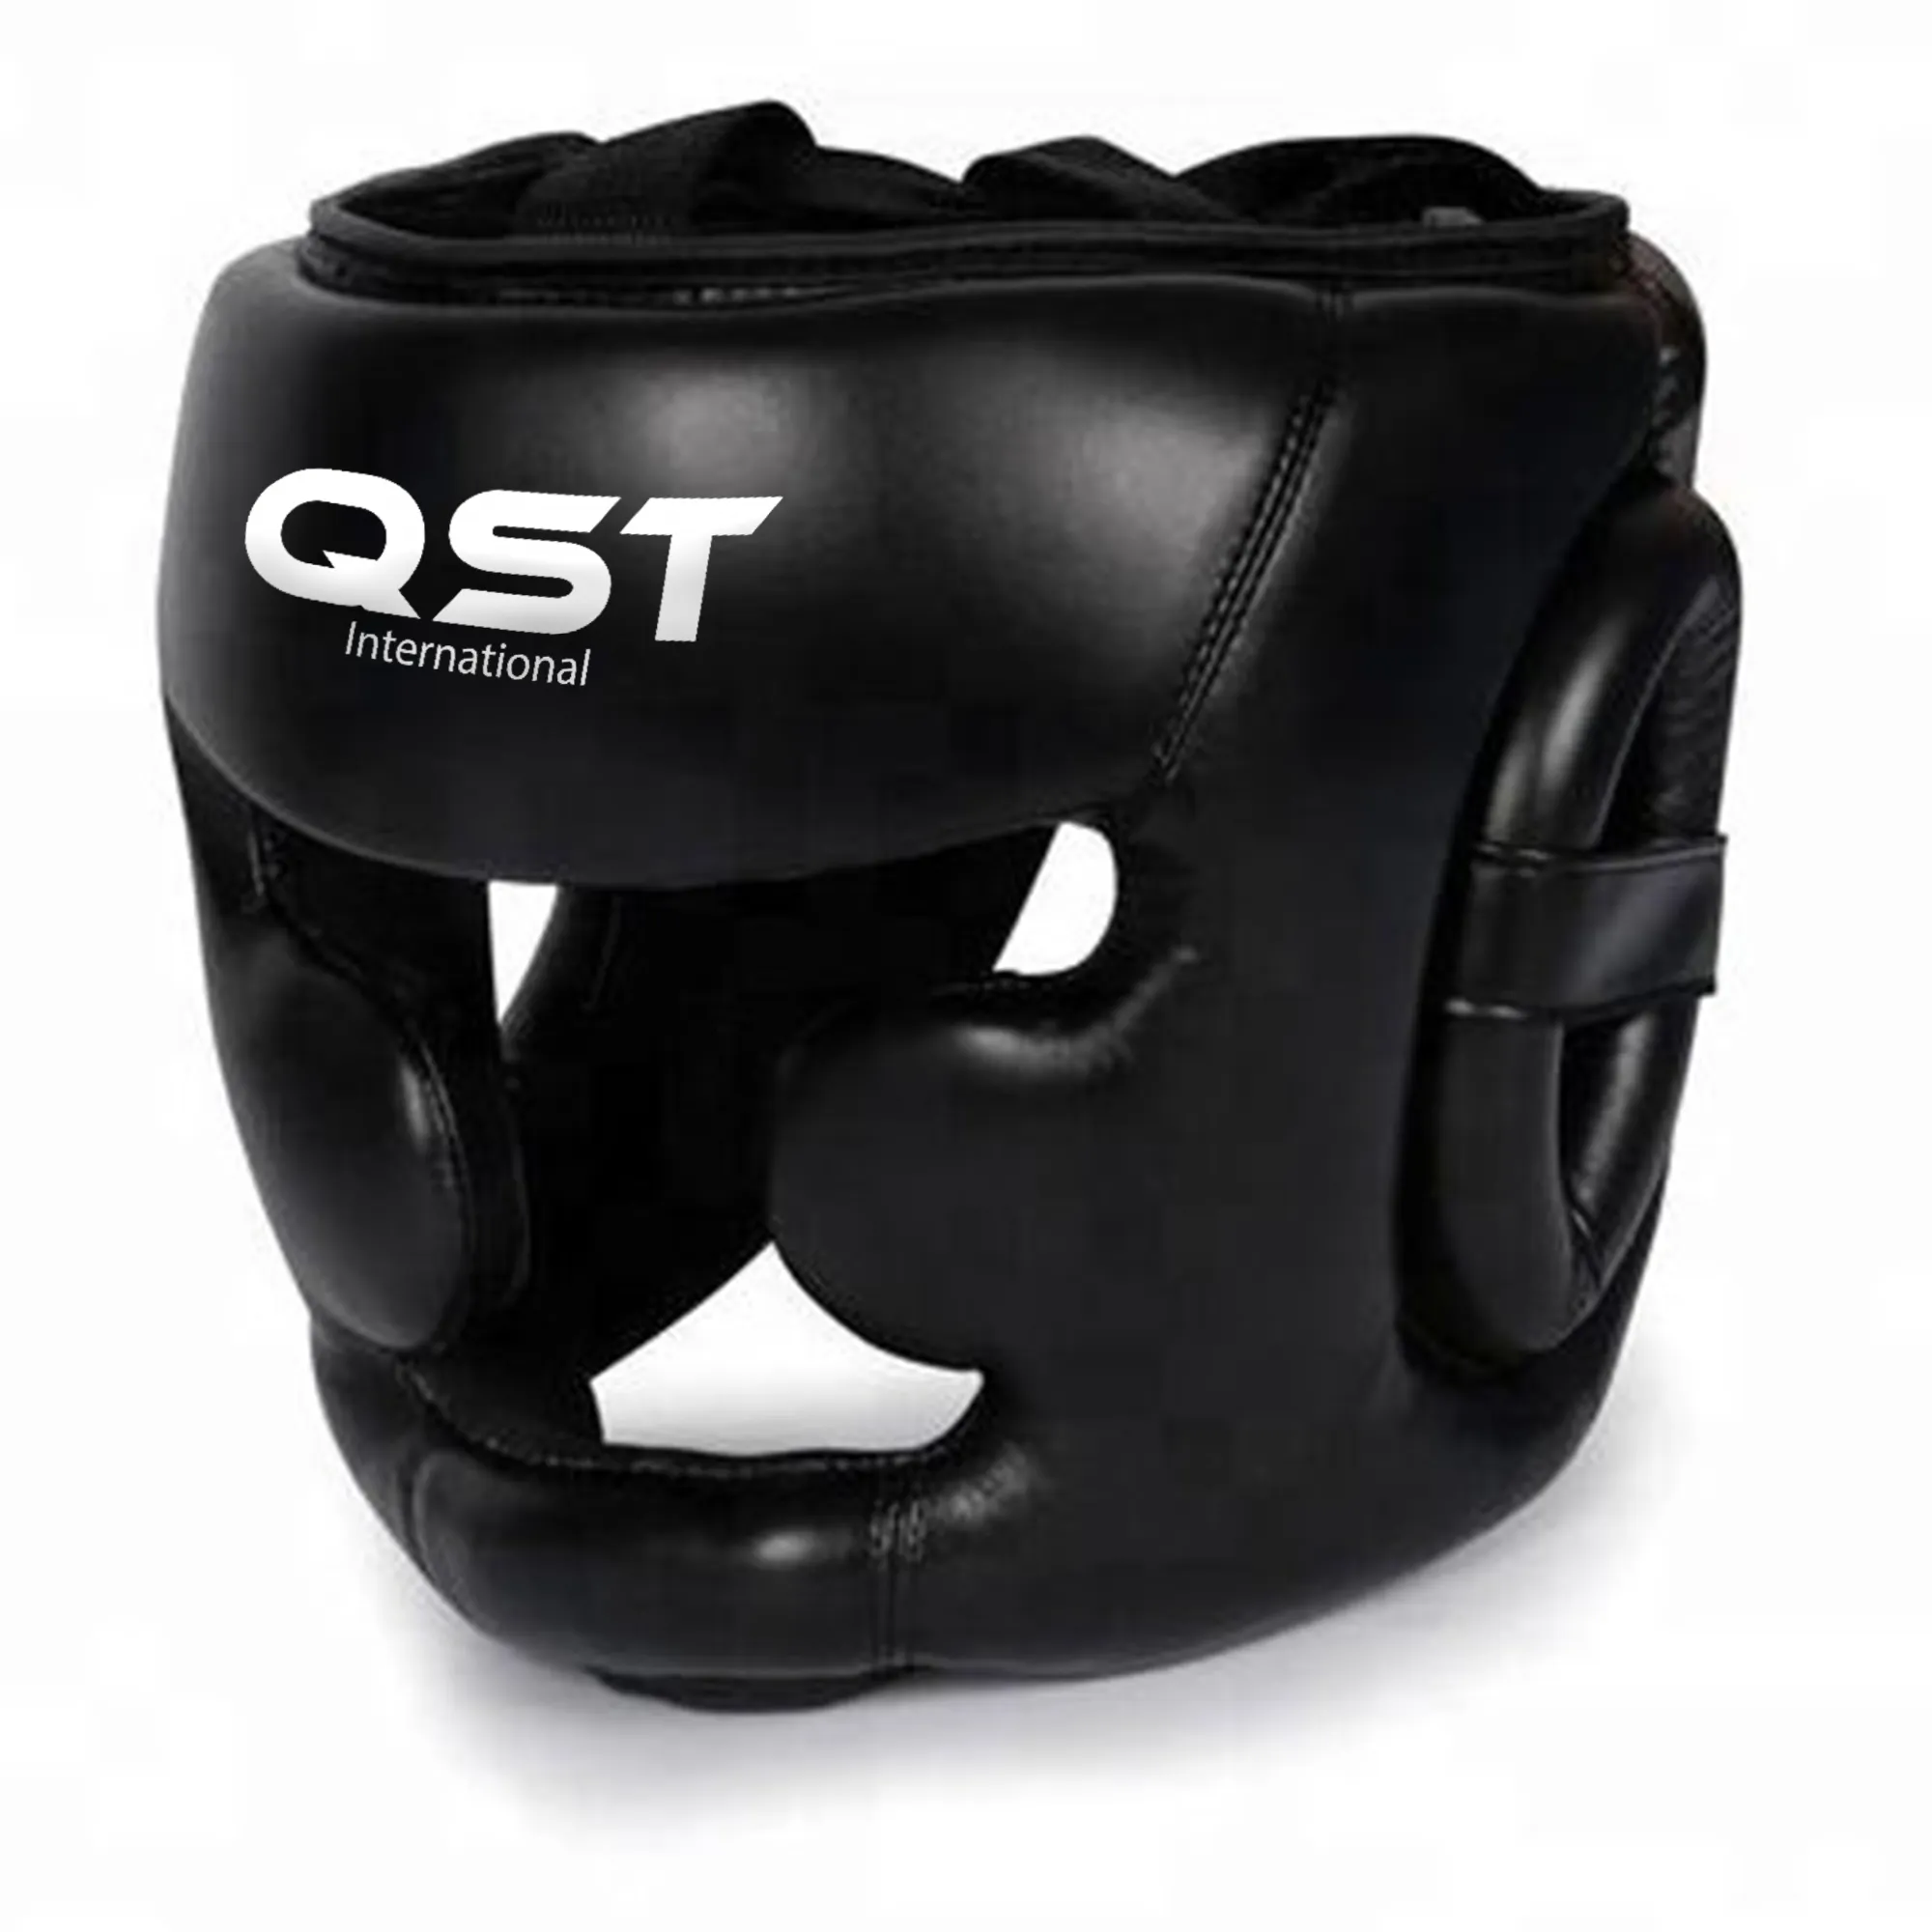 QST INTERNATIONAL 2023最新ボクシングヘッドガードMMAトレーニングプロテクションヘルメットムエタイキックボクシング格闘技ヘッドギア